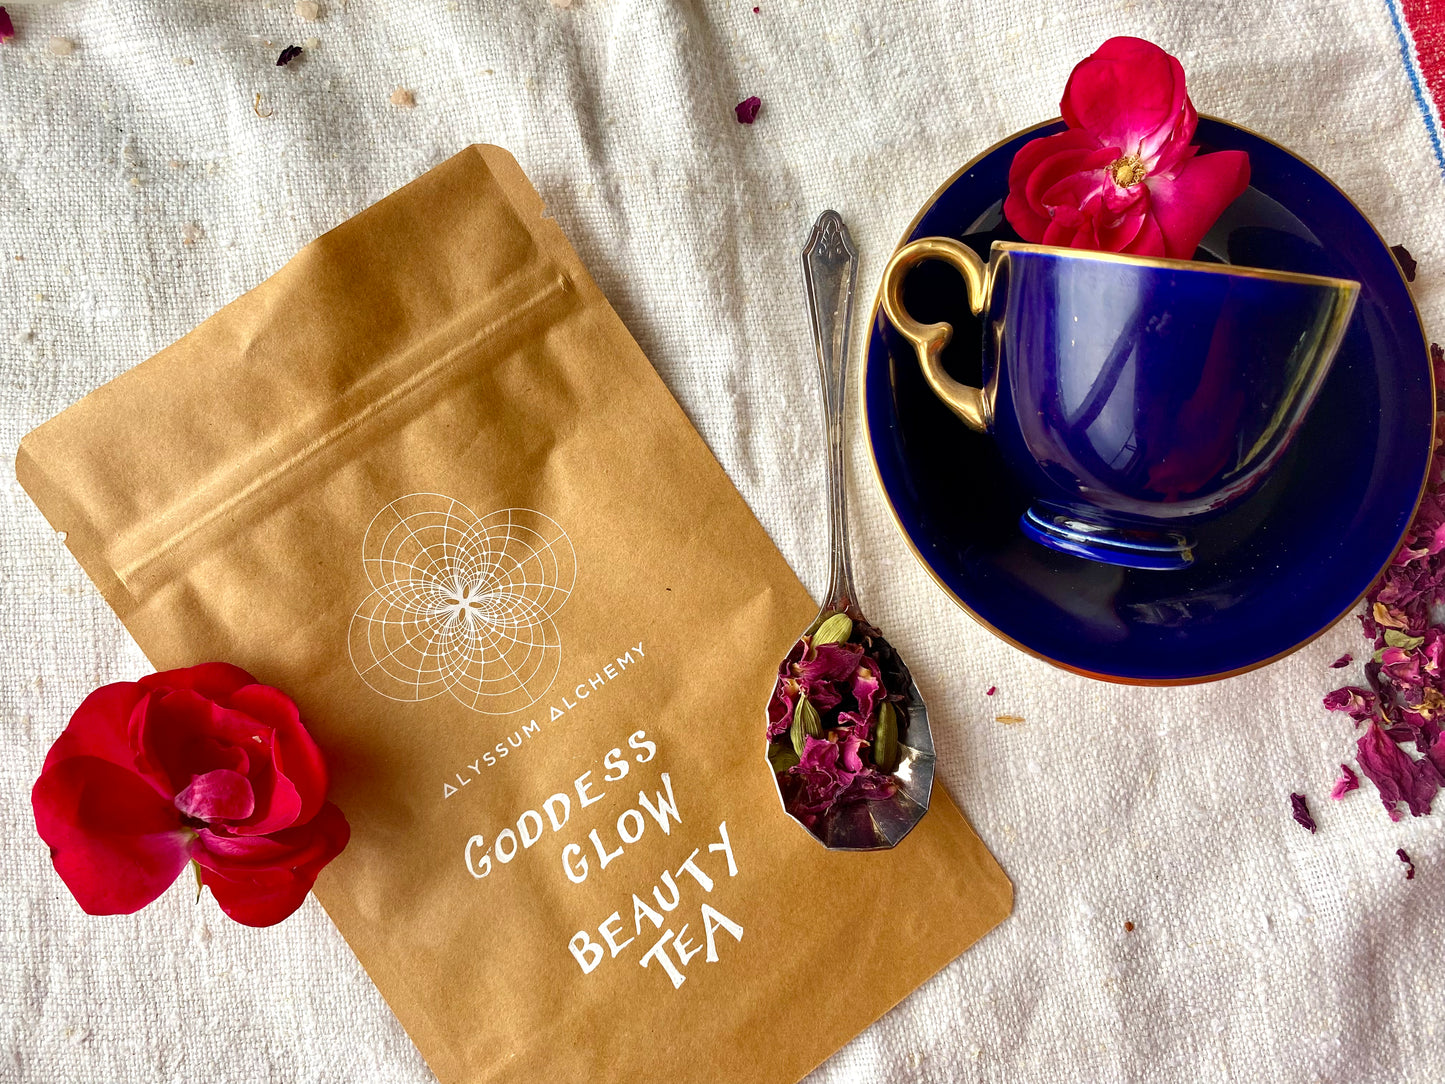 Goddess Glow Beauty Tea - Antioxidants to Make you Glow